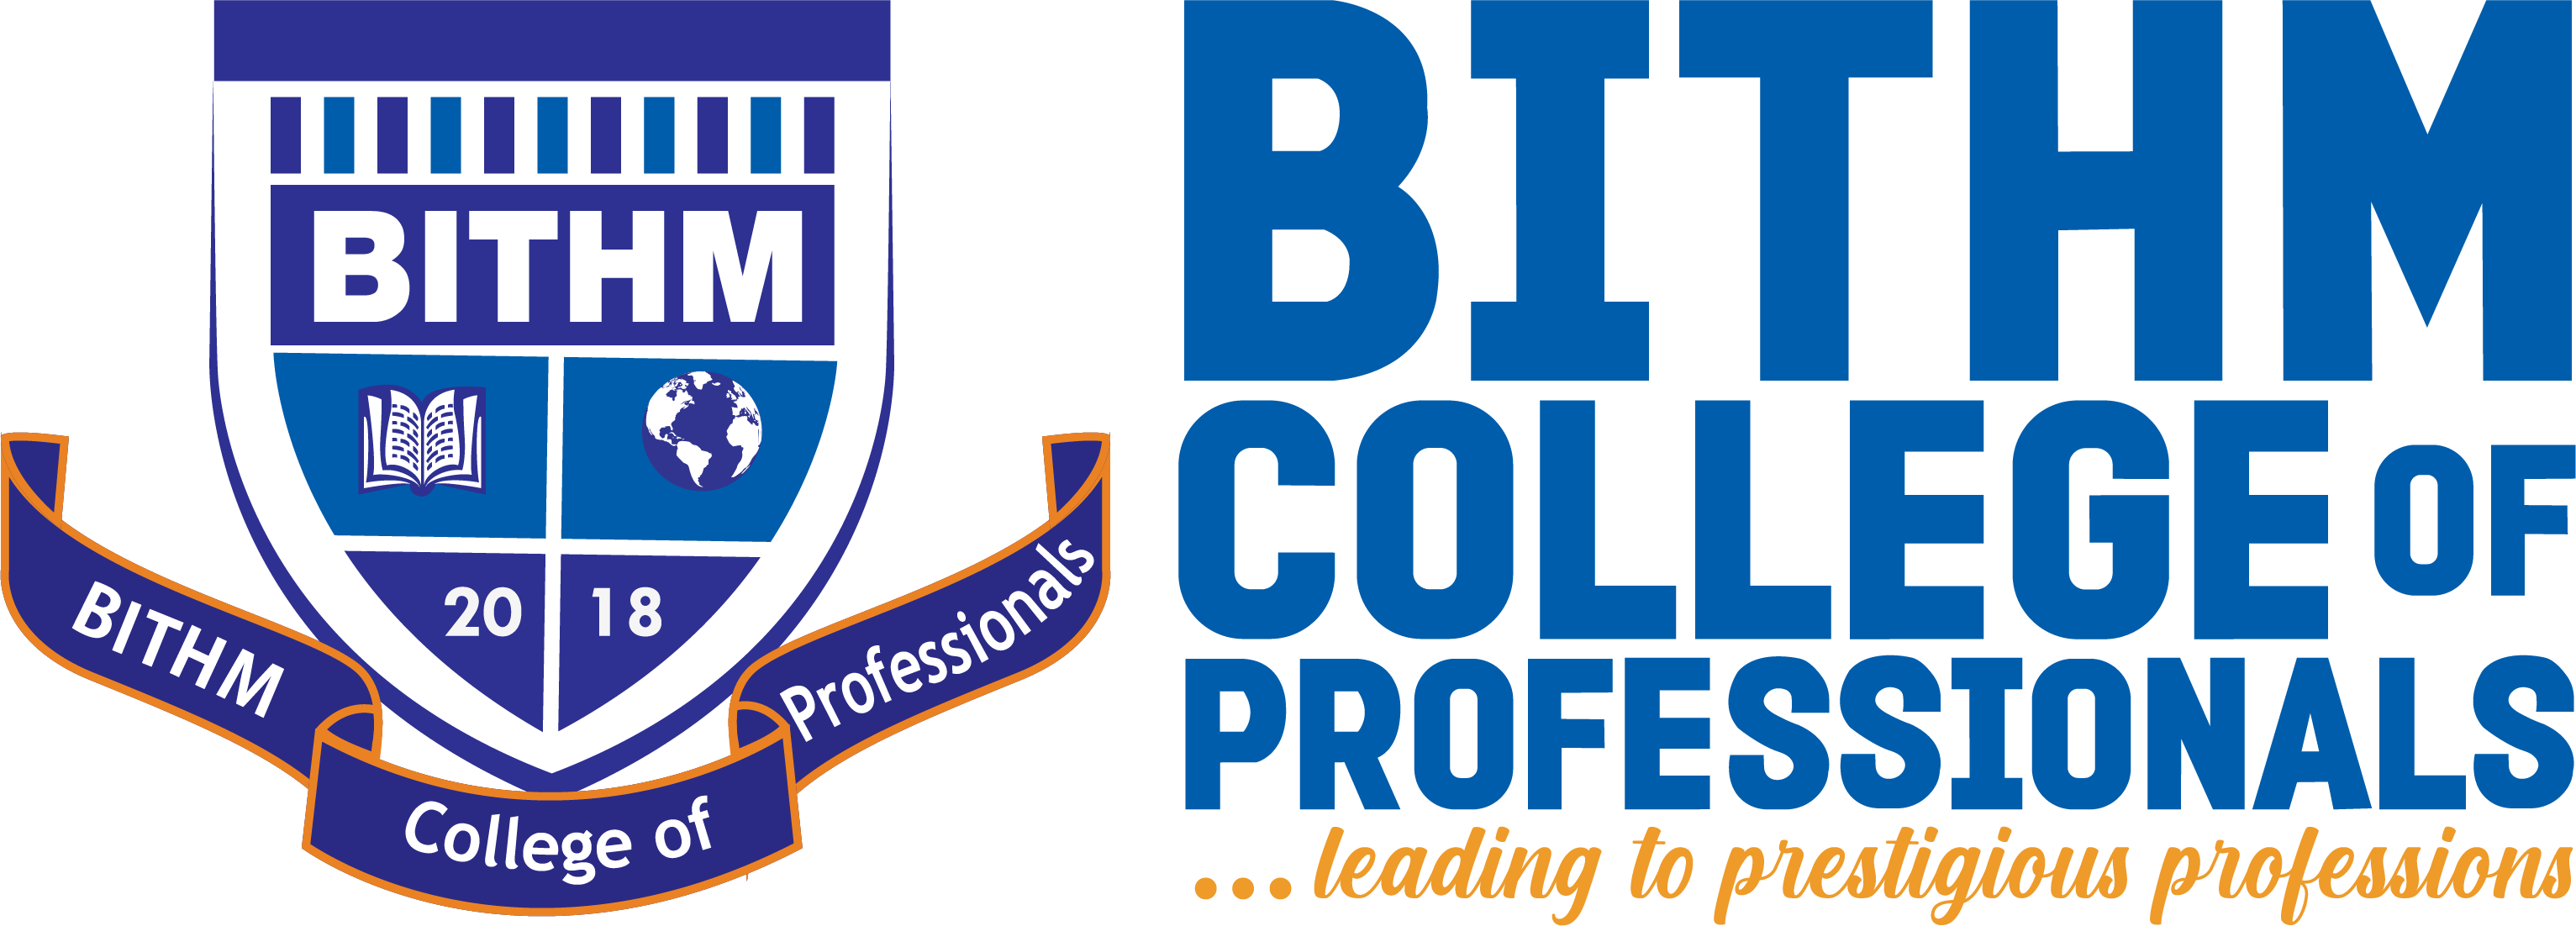 BITHM College Of Professionals